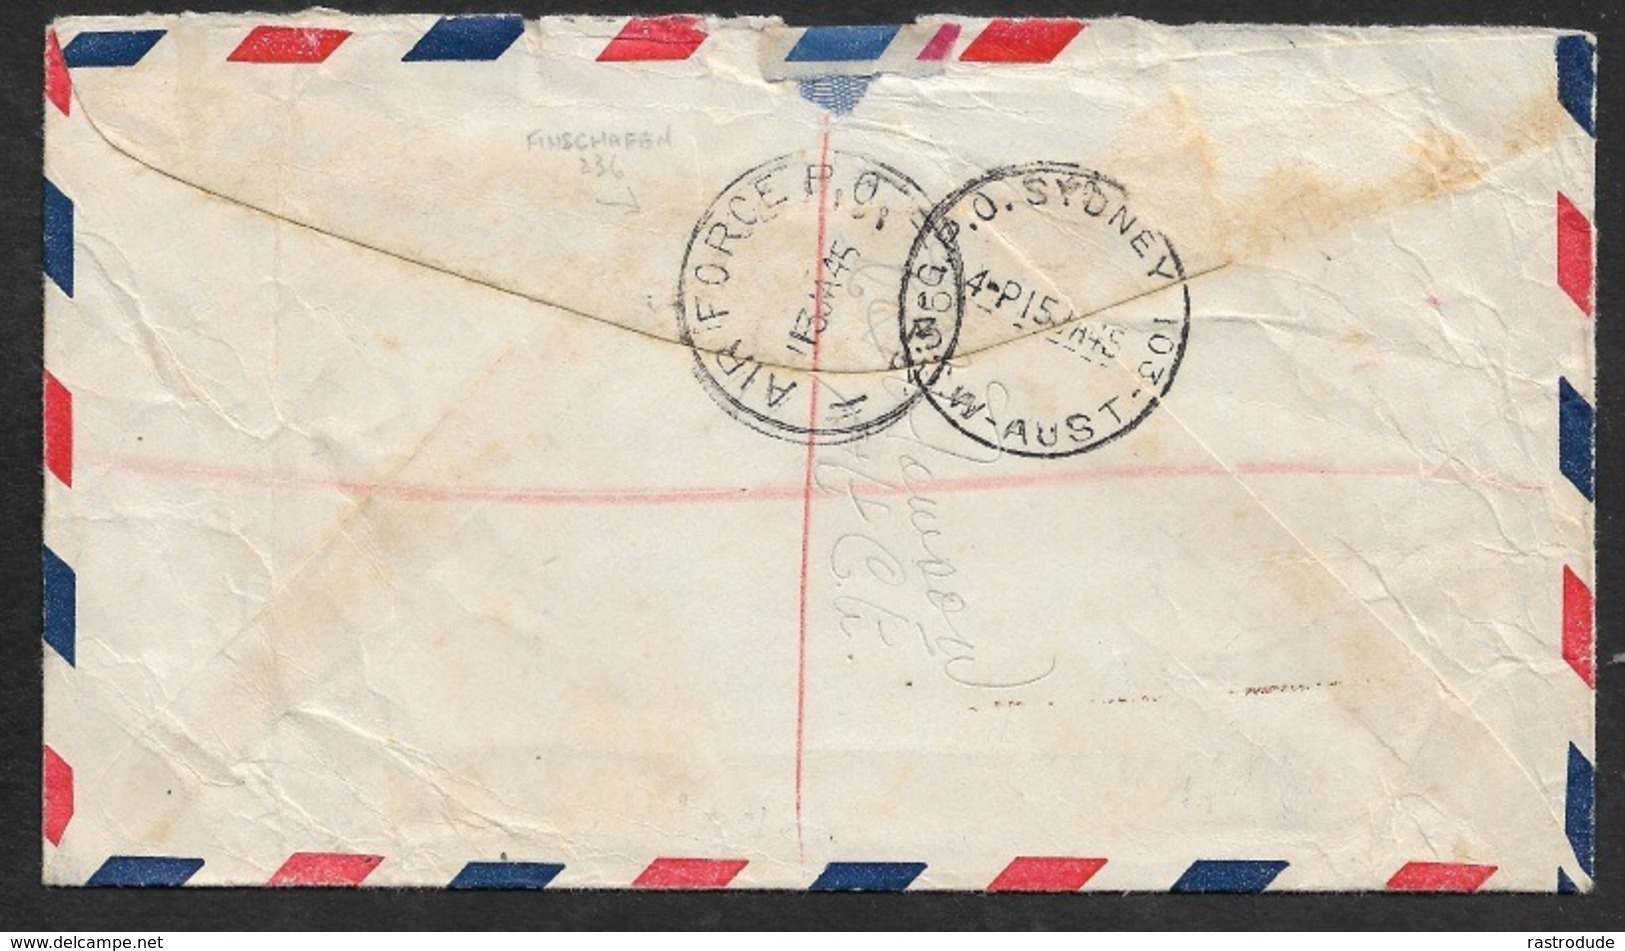 1945 - MIXED FRANKING U.S / AUSTRALIA APO 322 FINSCHHAFEN, NEW GUINEA Censored WWII Army Cover - 2c. 1941-1960 Brieven